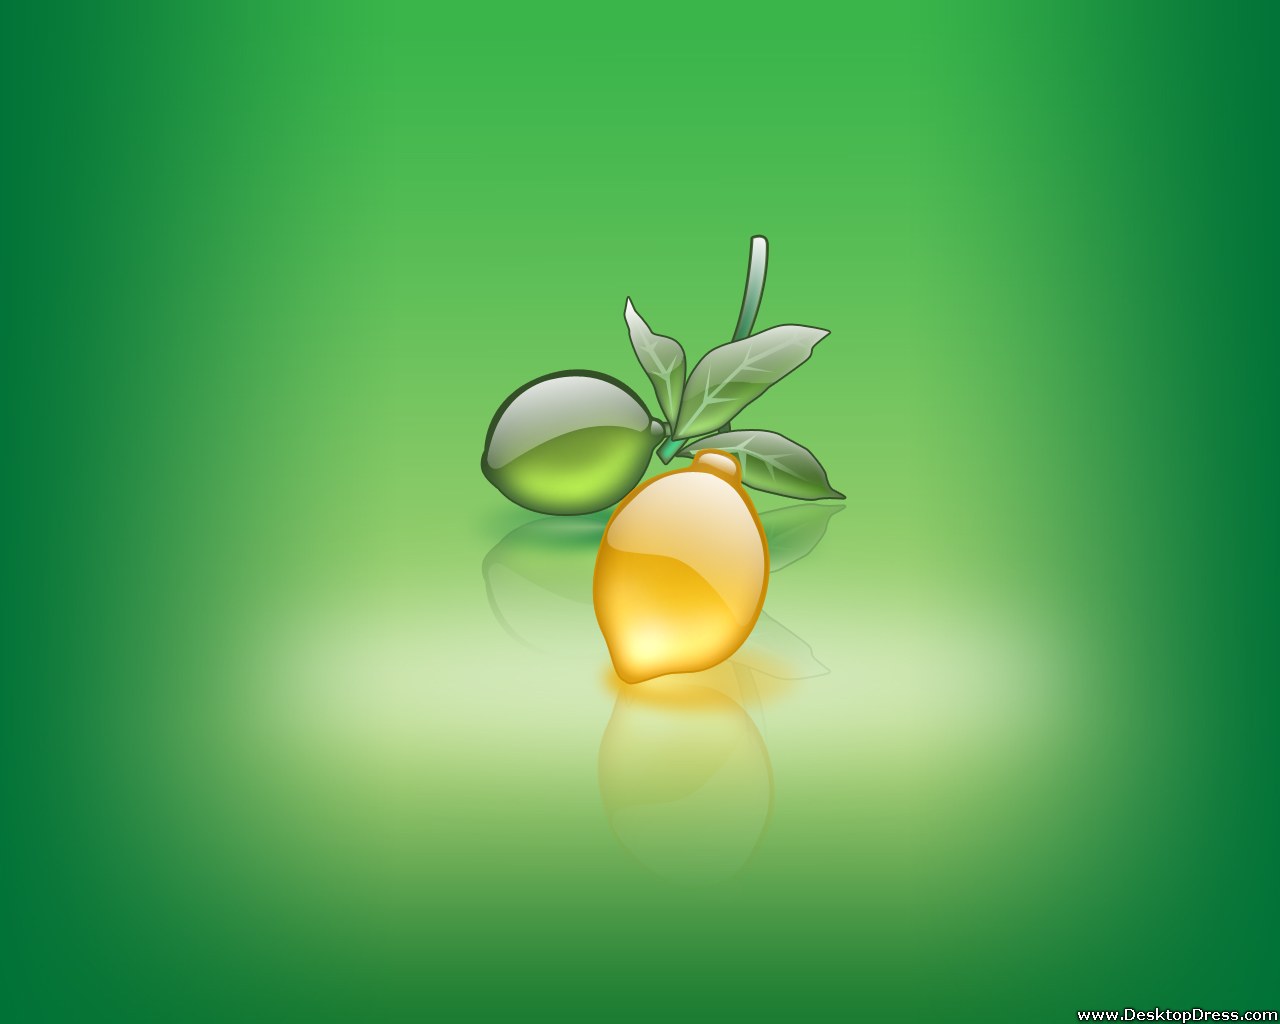 Desktop Wallpaper 3D Background Lemon in Green Background